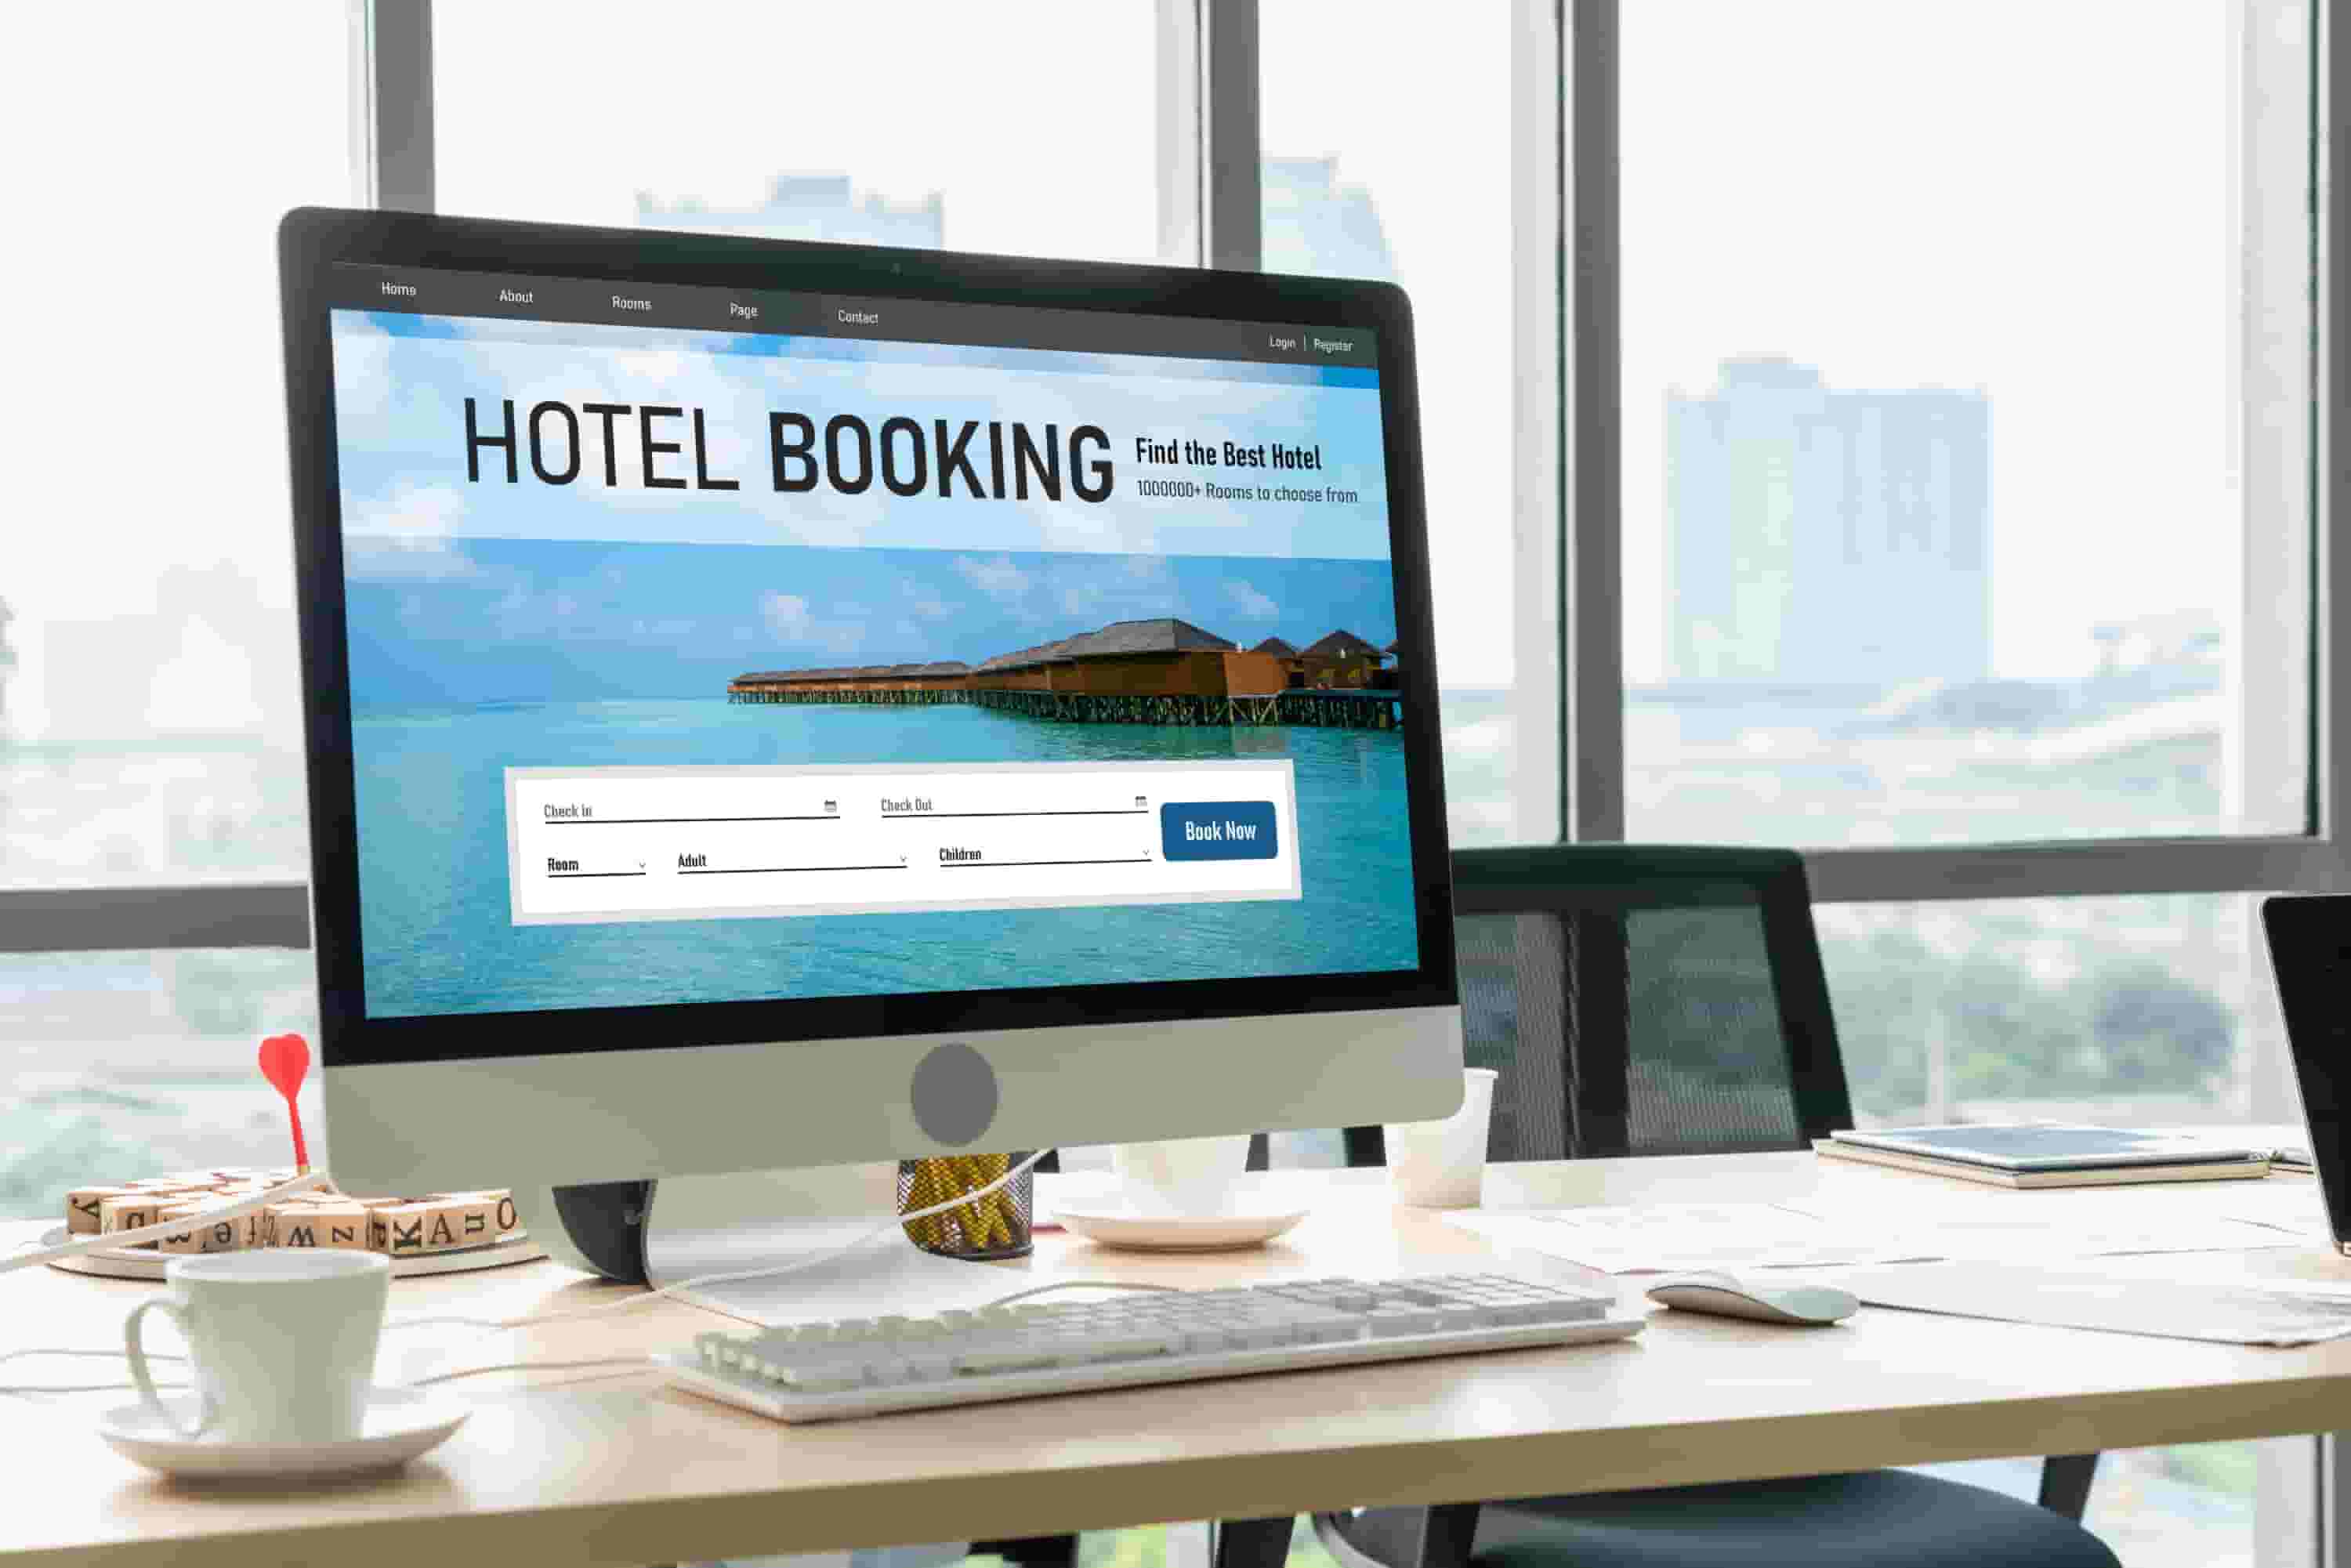 hotel booking engine